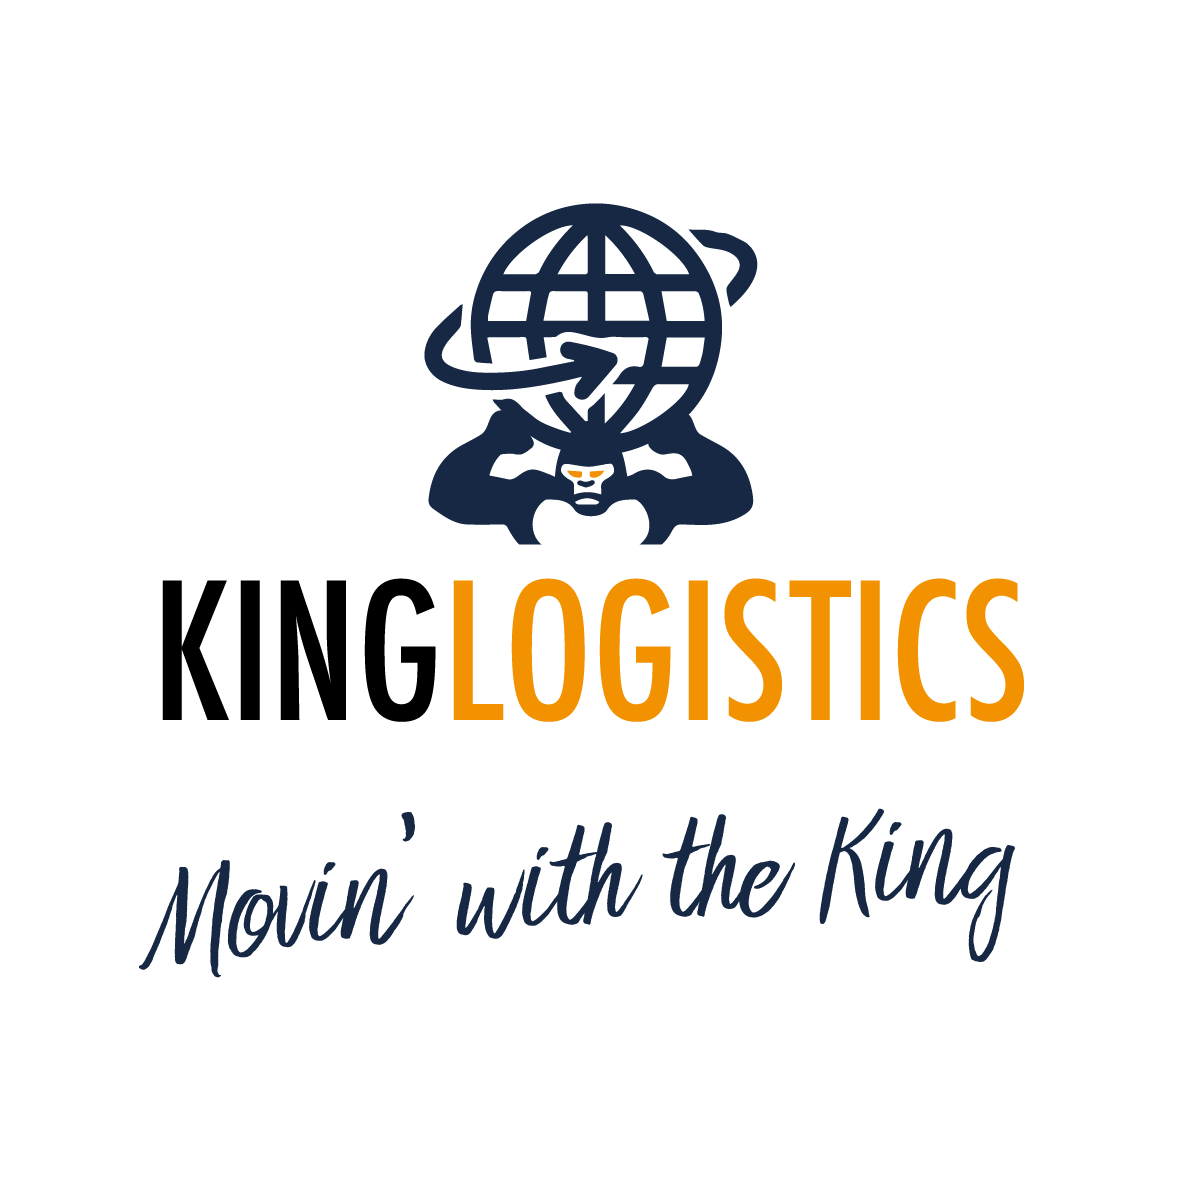 king logistic